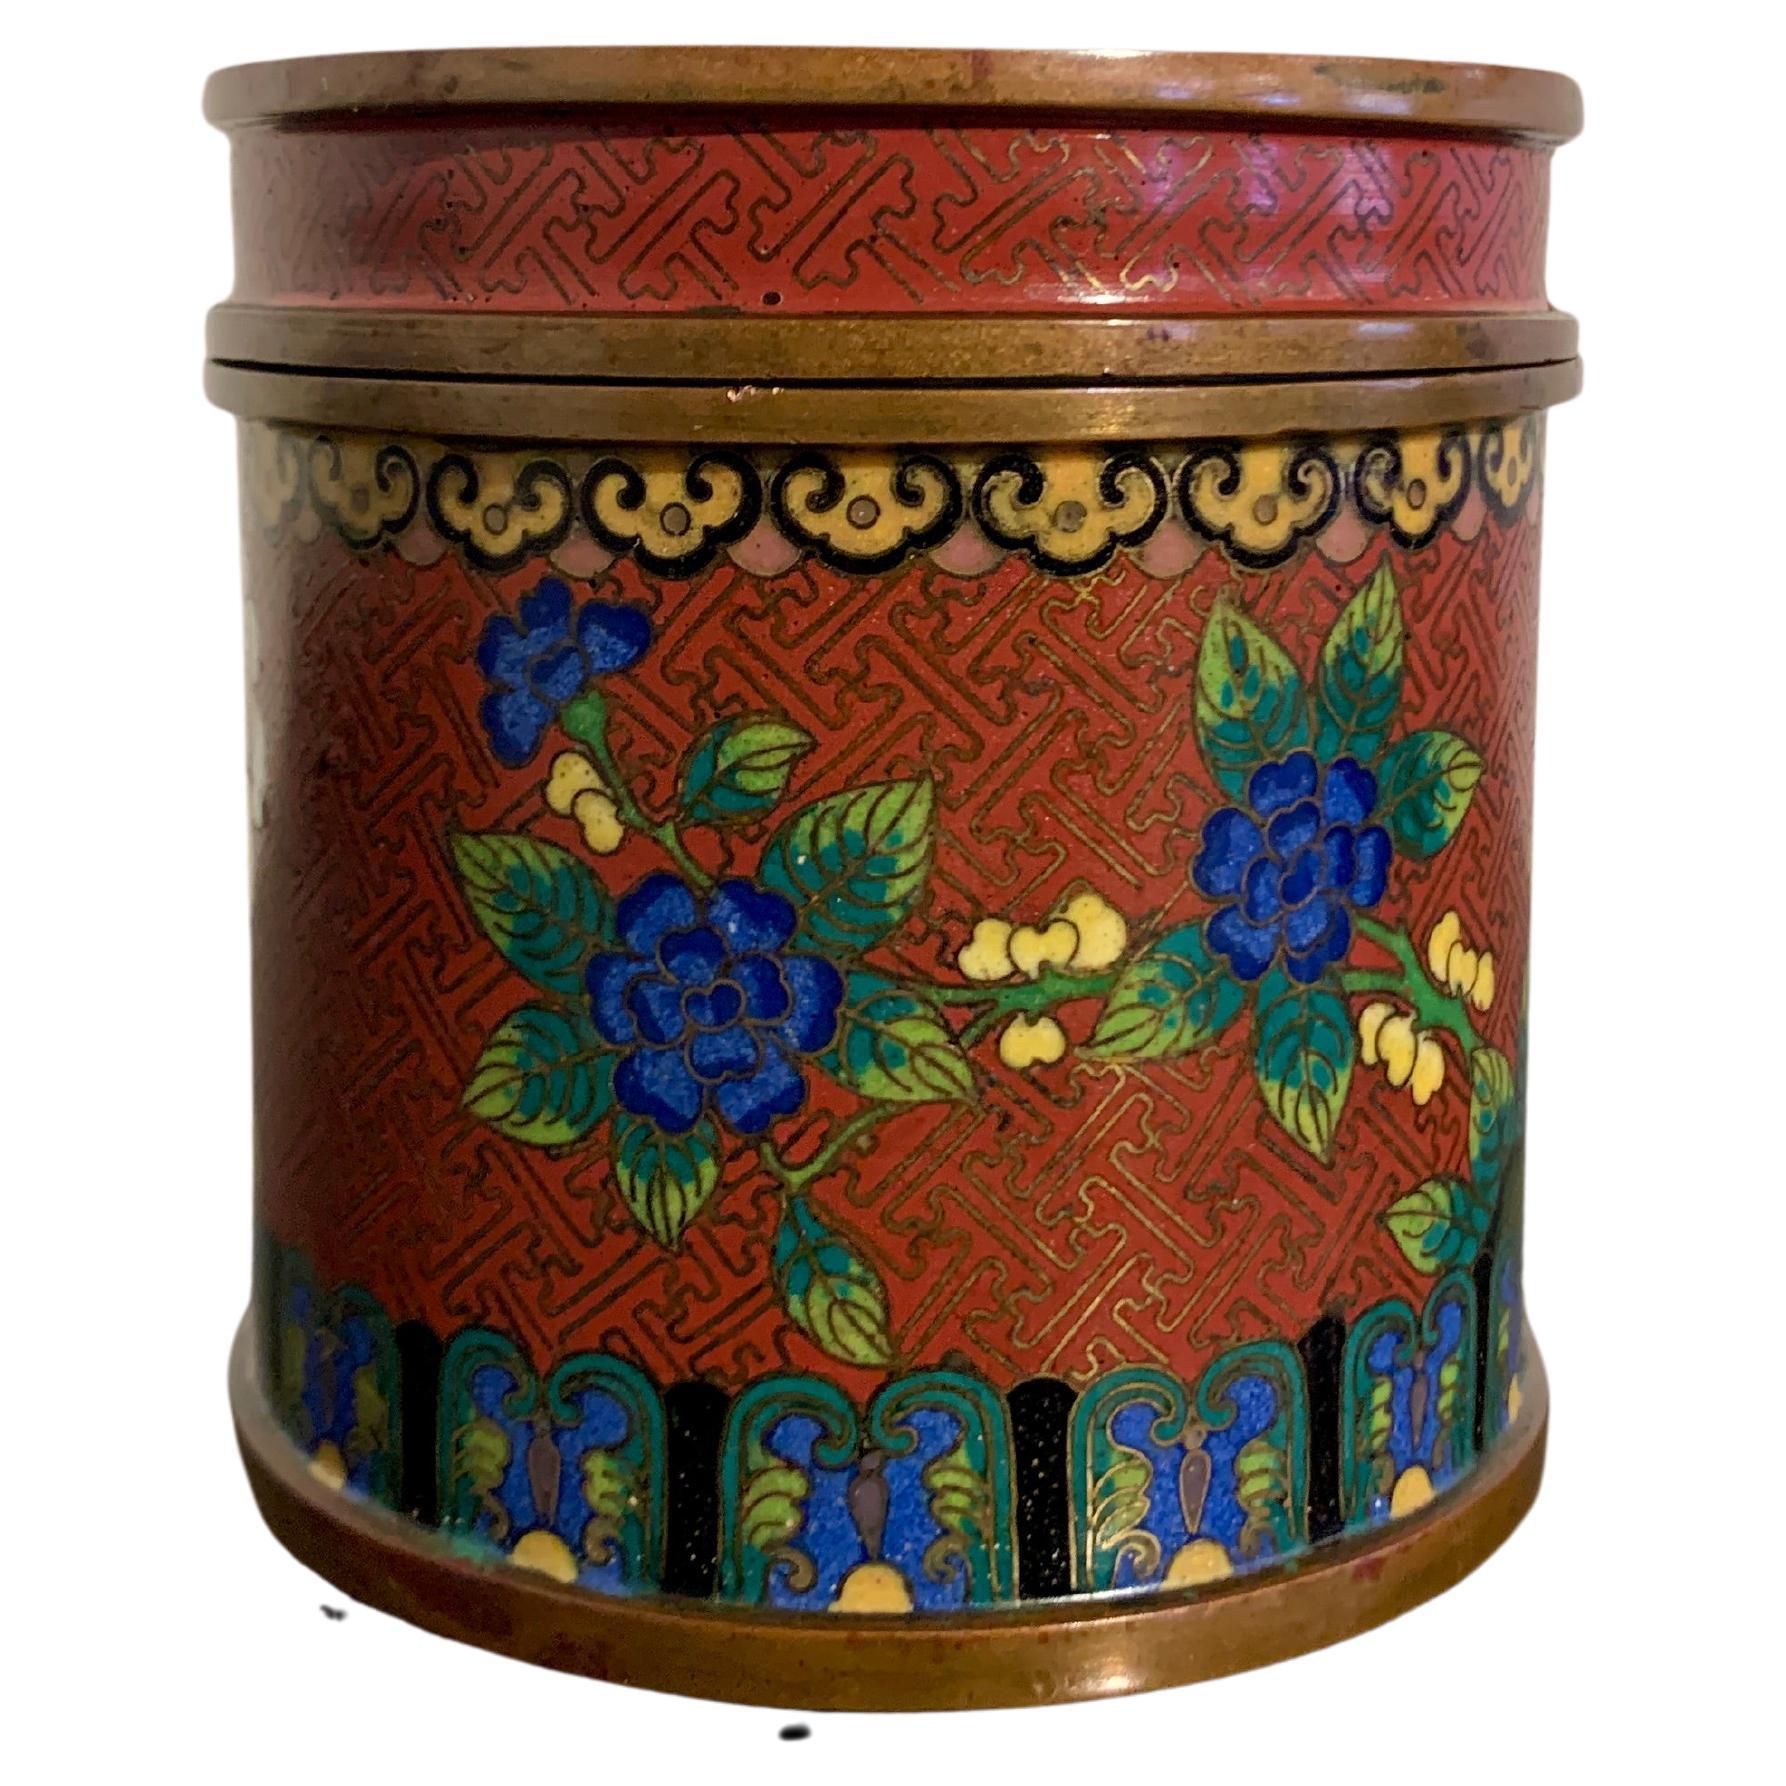 Chinese Lao Tian Li Cloisonne Cylindrical Box, Late Qing Dynasty, China